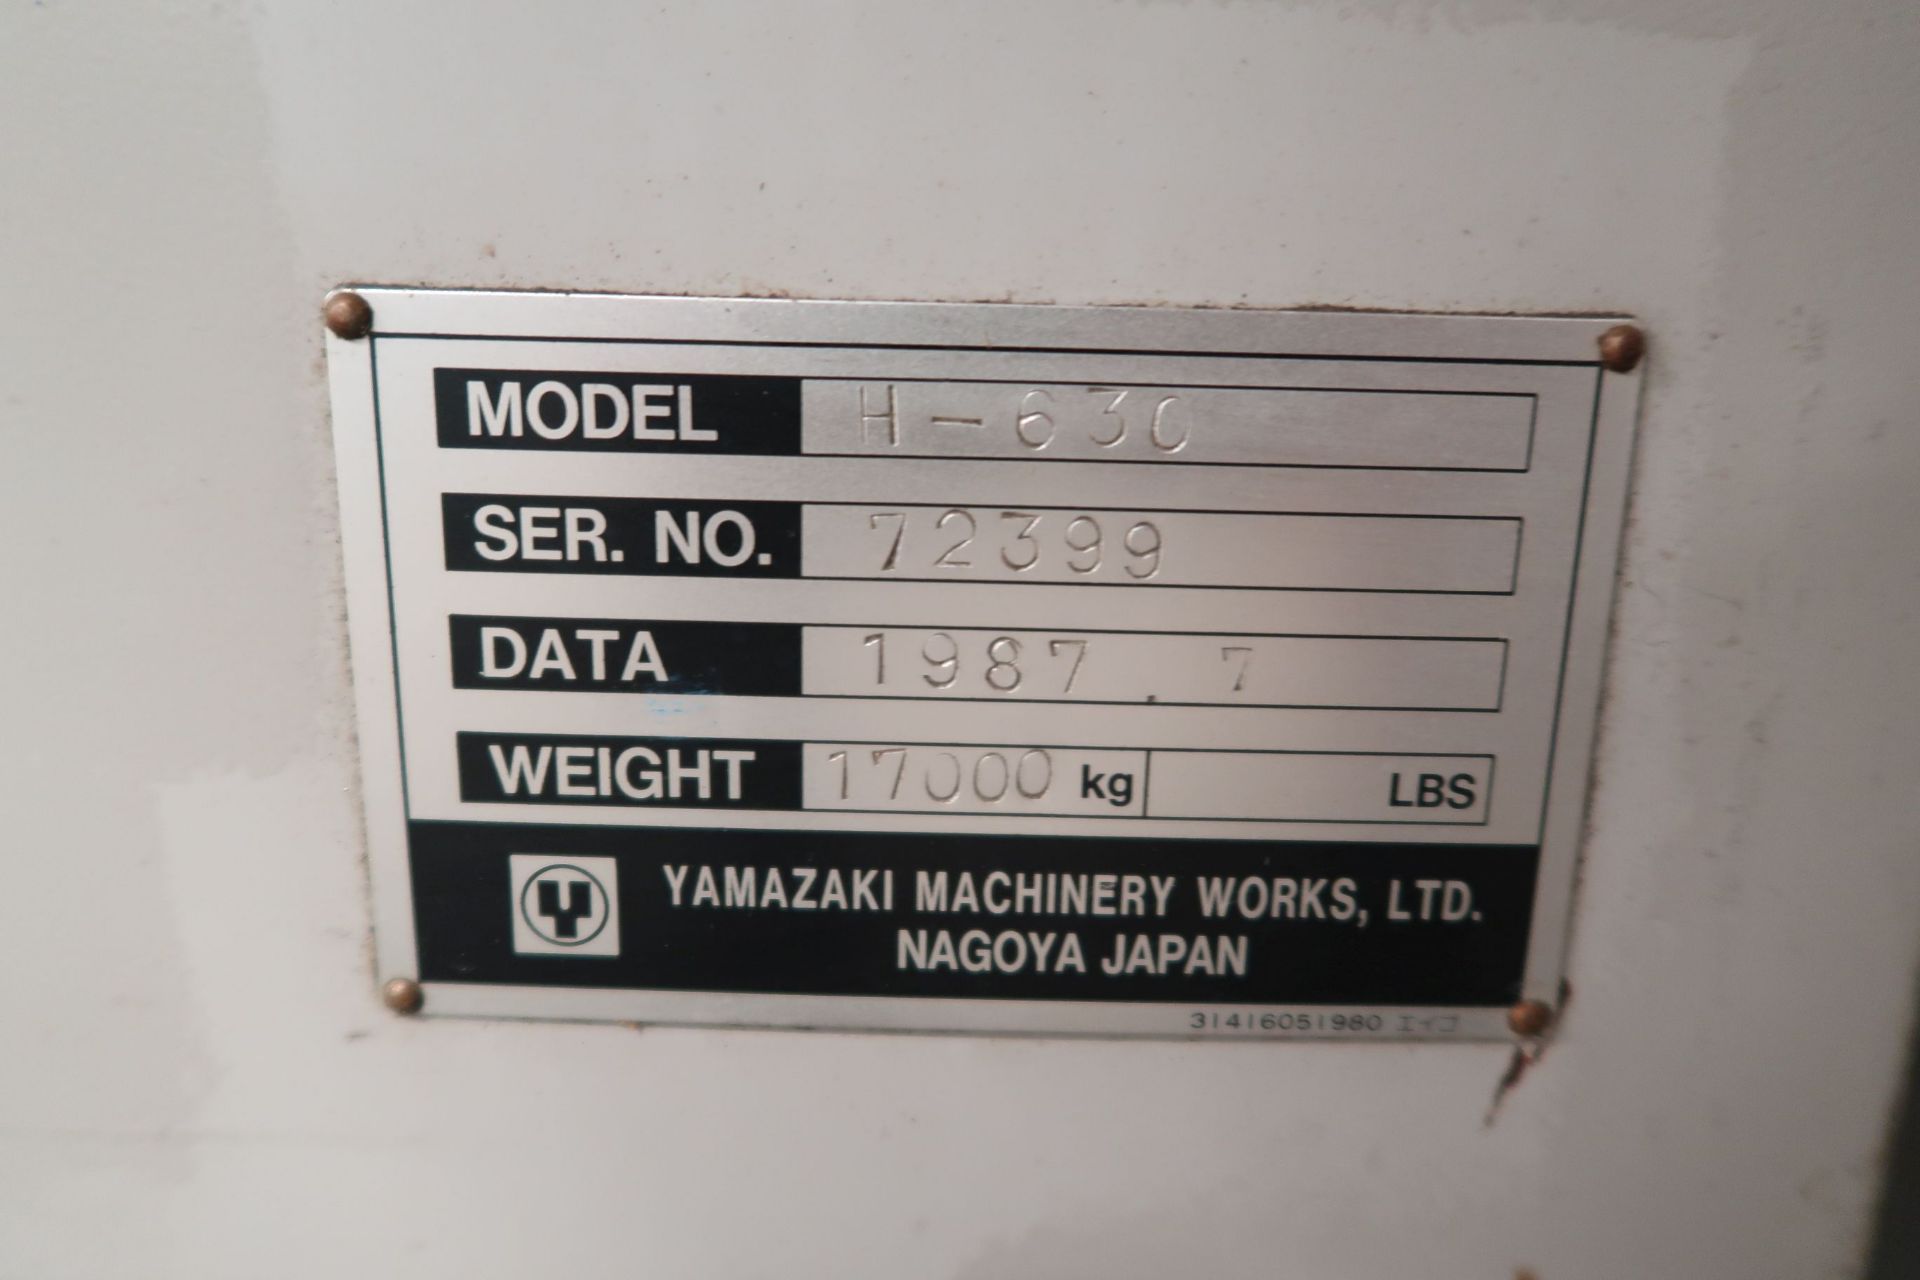 MAZAK MAZATECH H-630 TWO-PALLET CNC HORIZONTAL MACHINING CENTER; S/N 72399 (1987), MAZATROL CAM M2 - Image 9 of 13